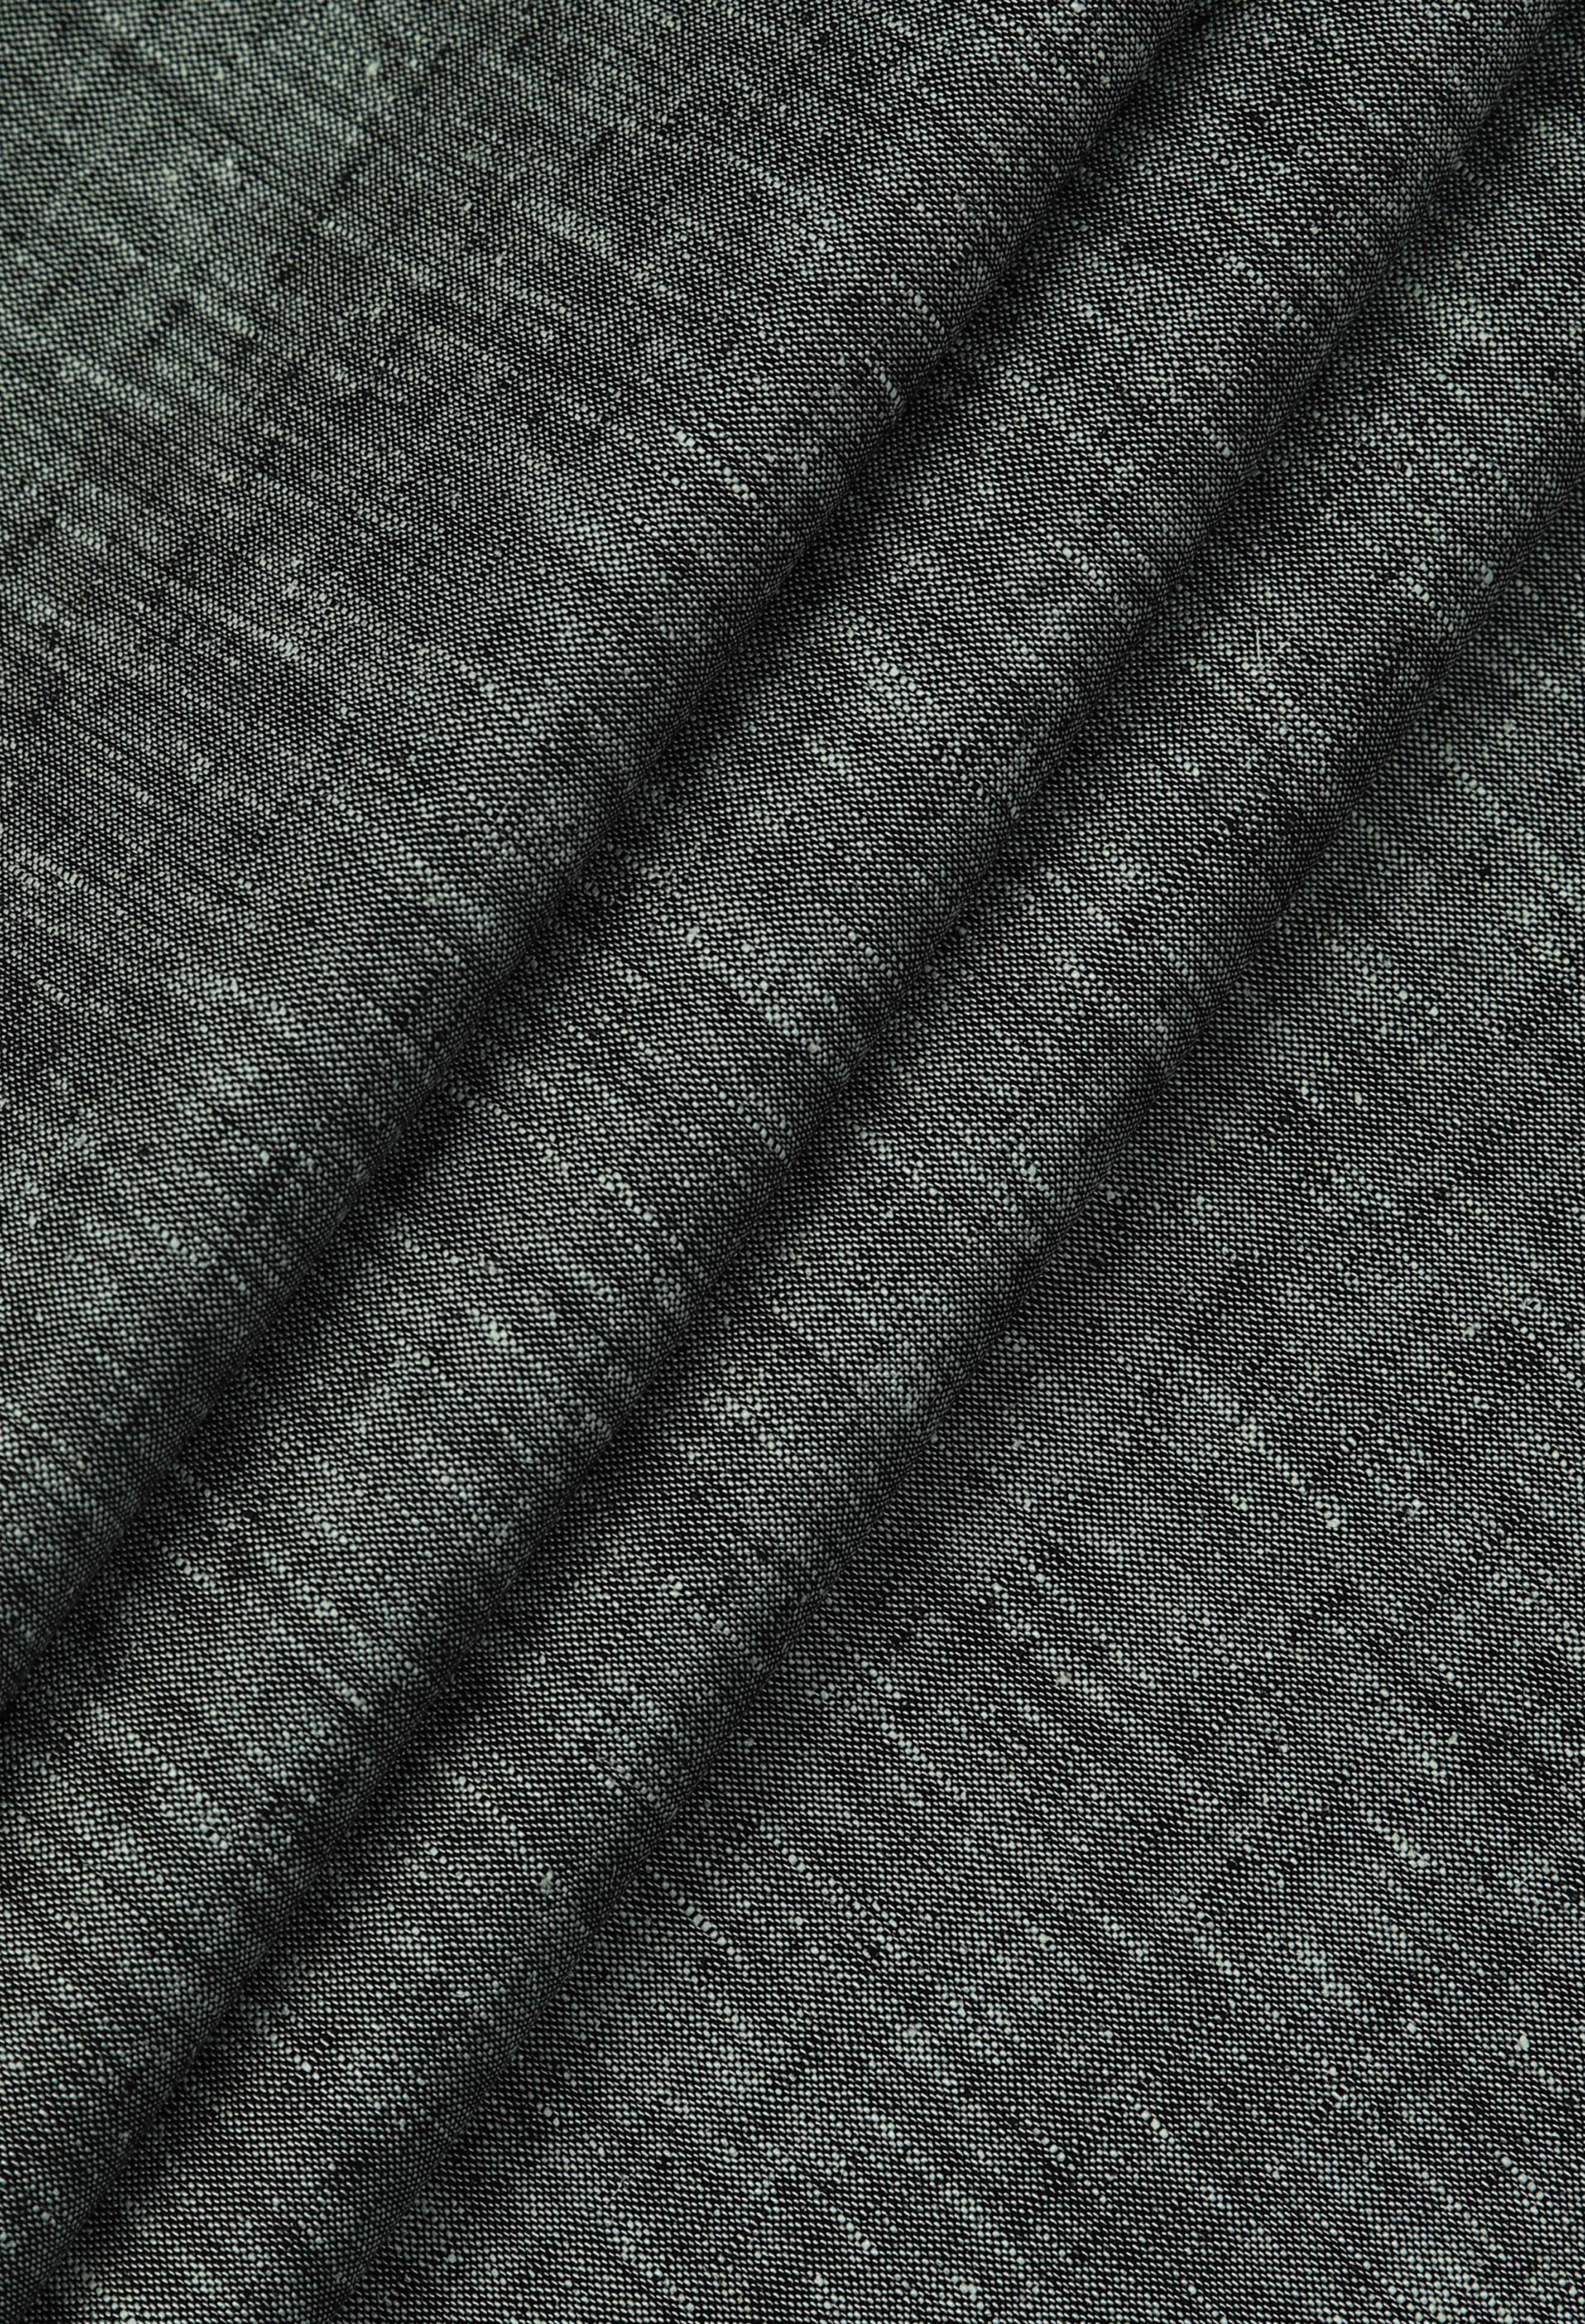 Charcoal Grey linen